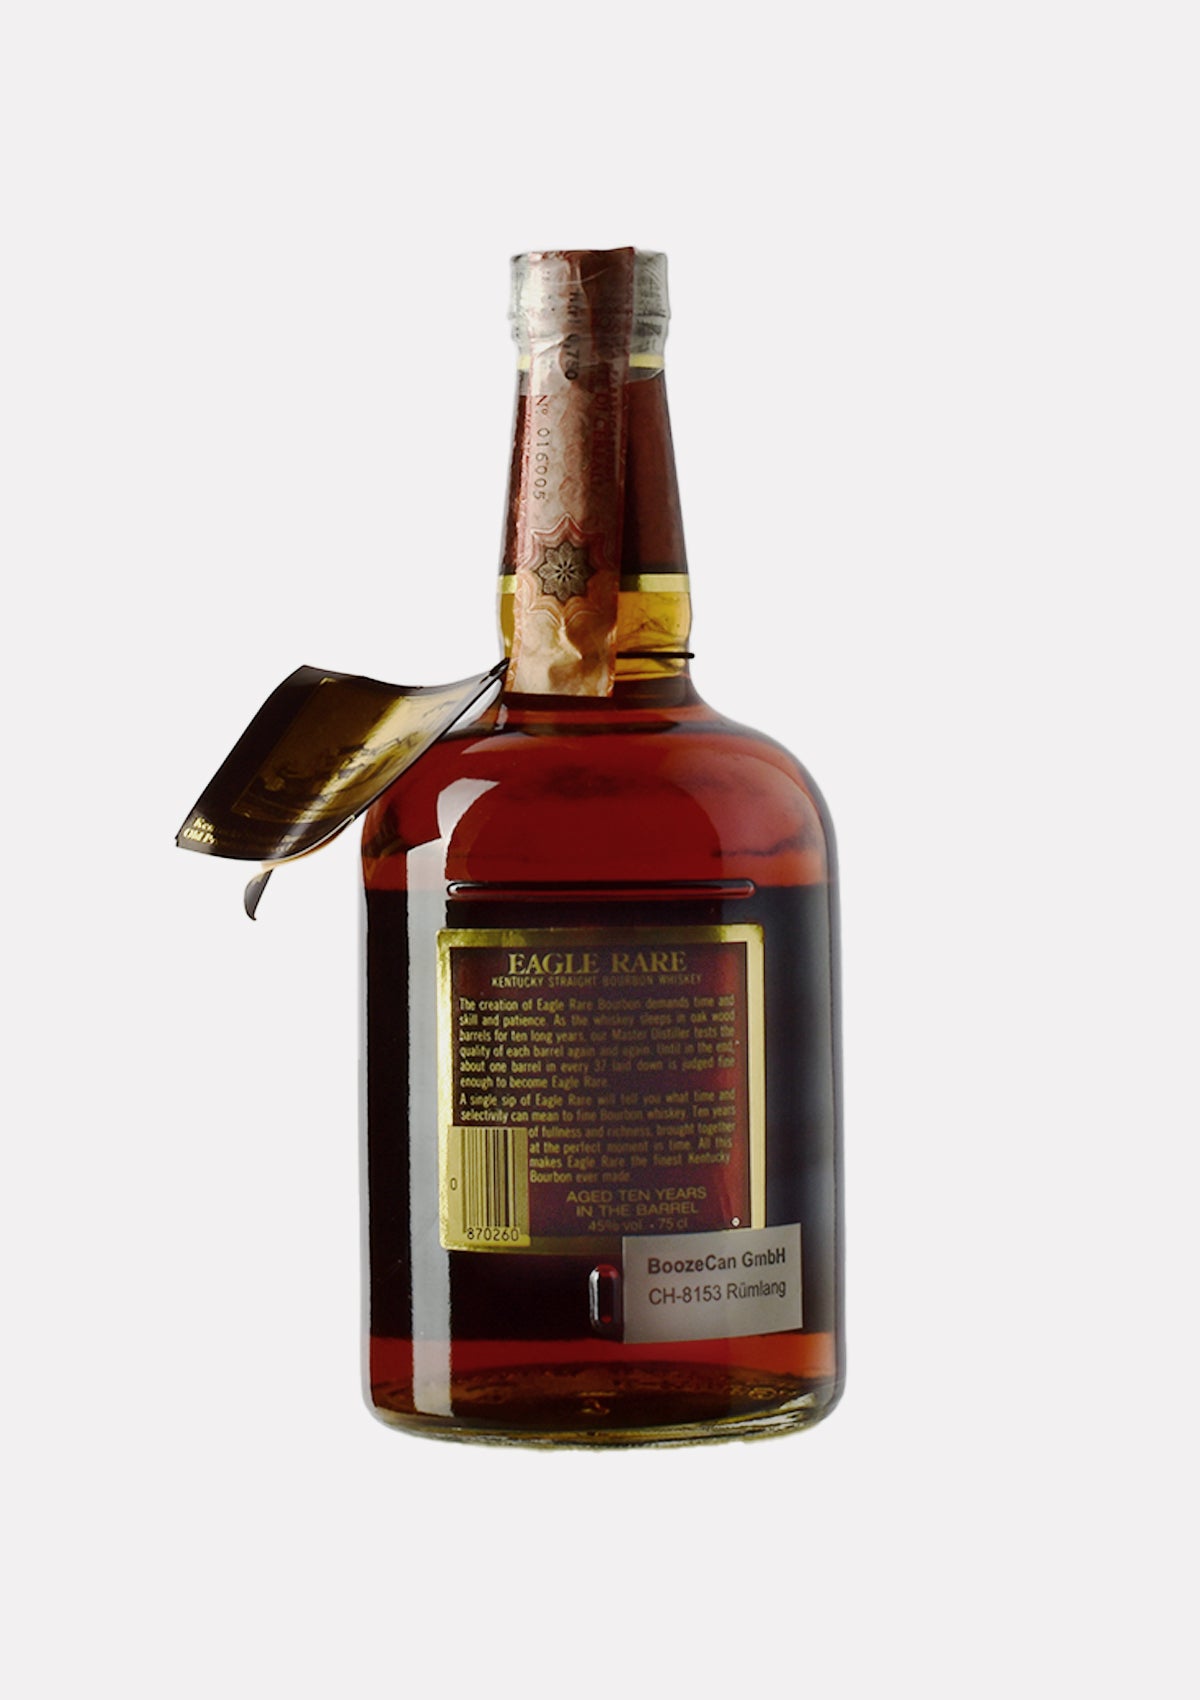 Eagle Rare Kentucky Straight Bourbon Whiskey 10 Jahre